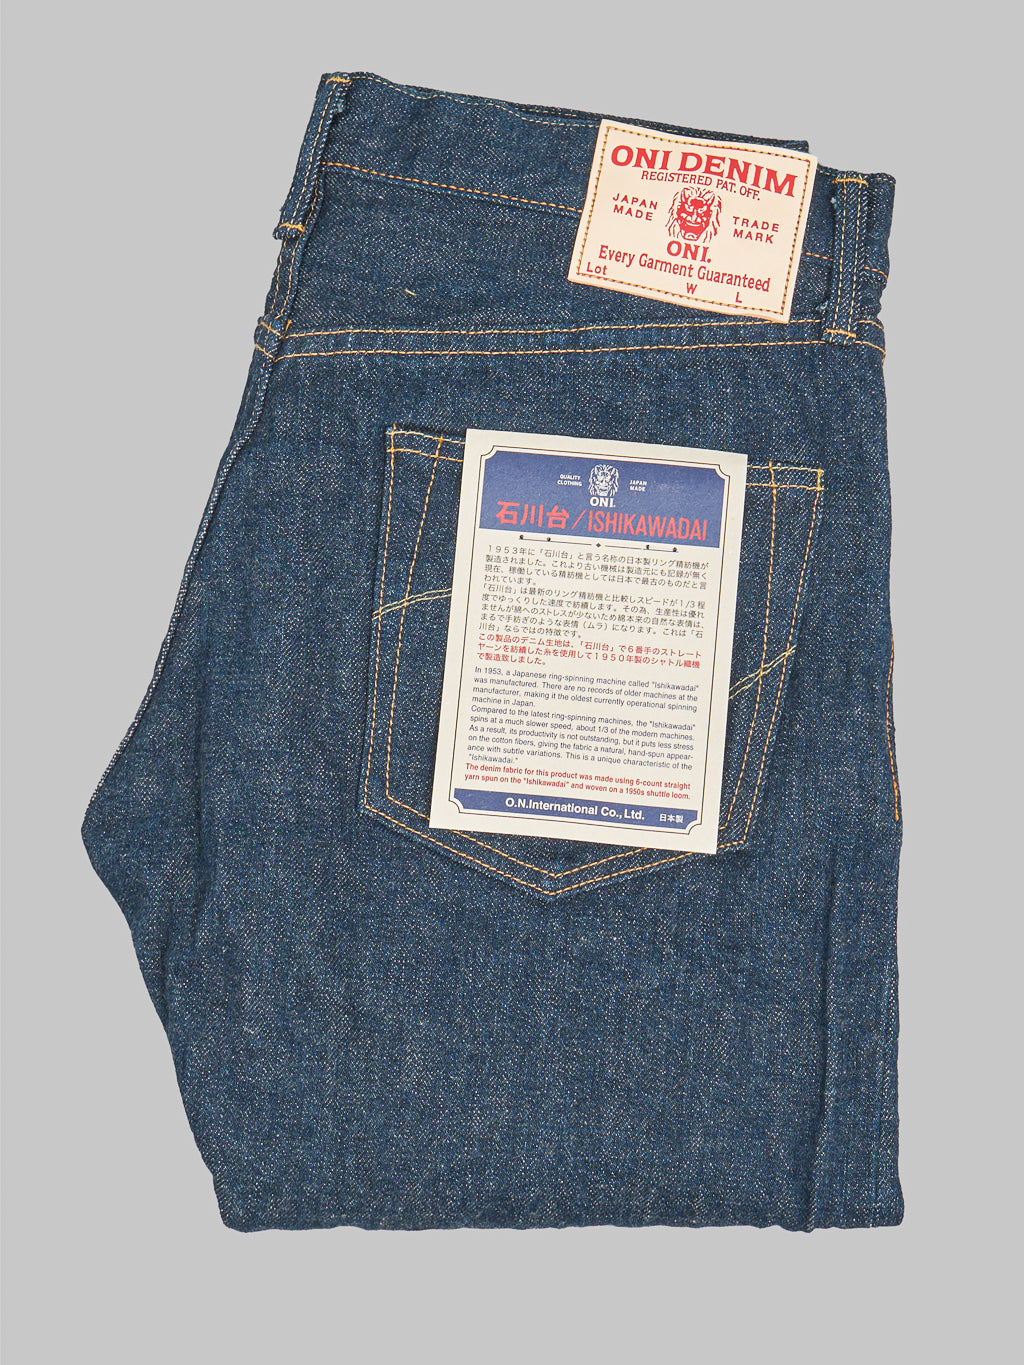 ONI Denim 622 Ishikawadai 15oz Relaxed Tapered Jeans made in japan